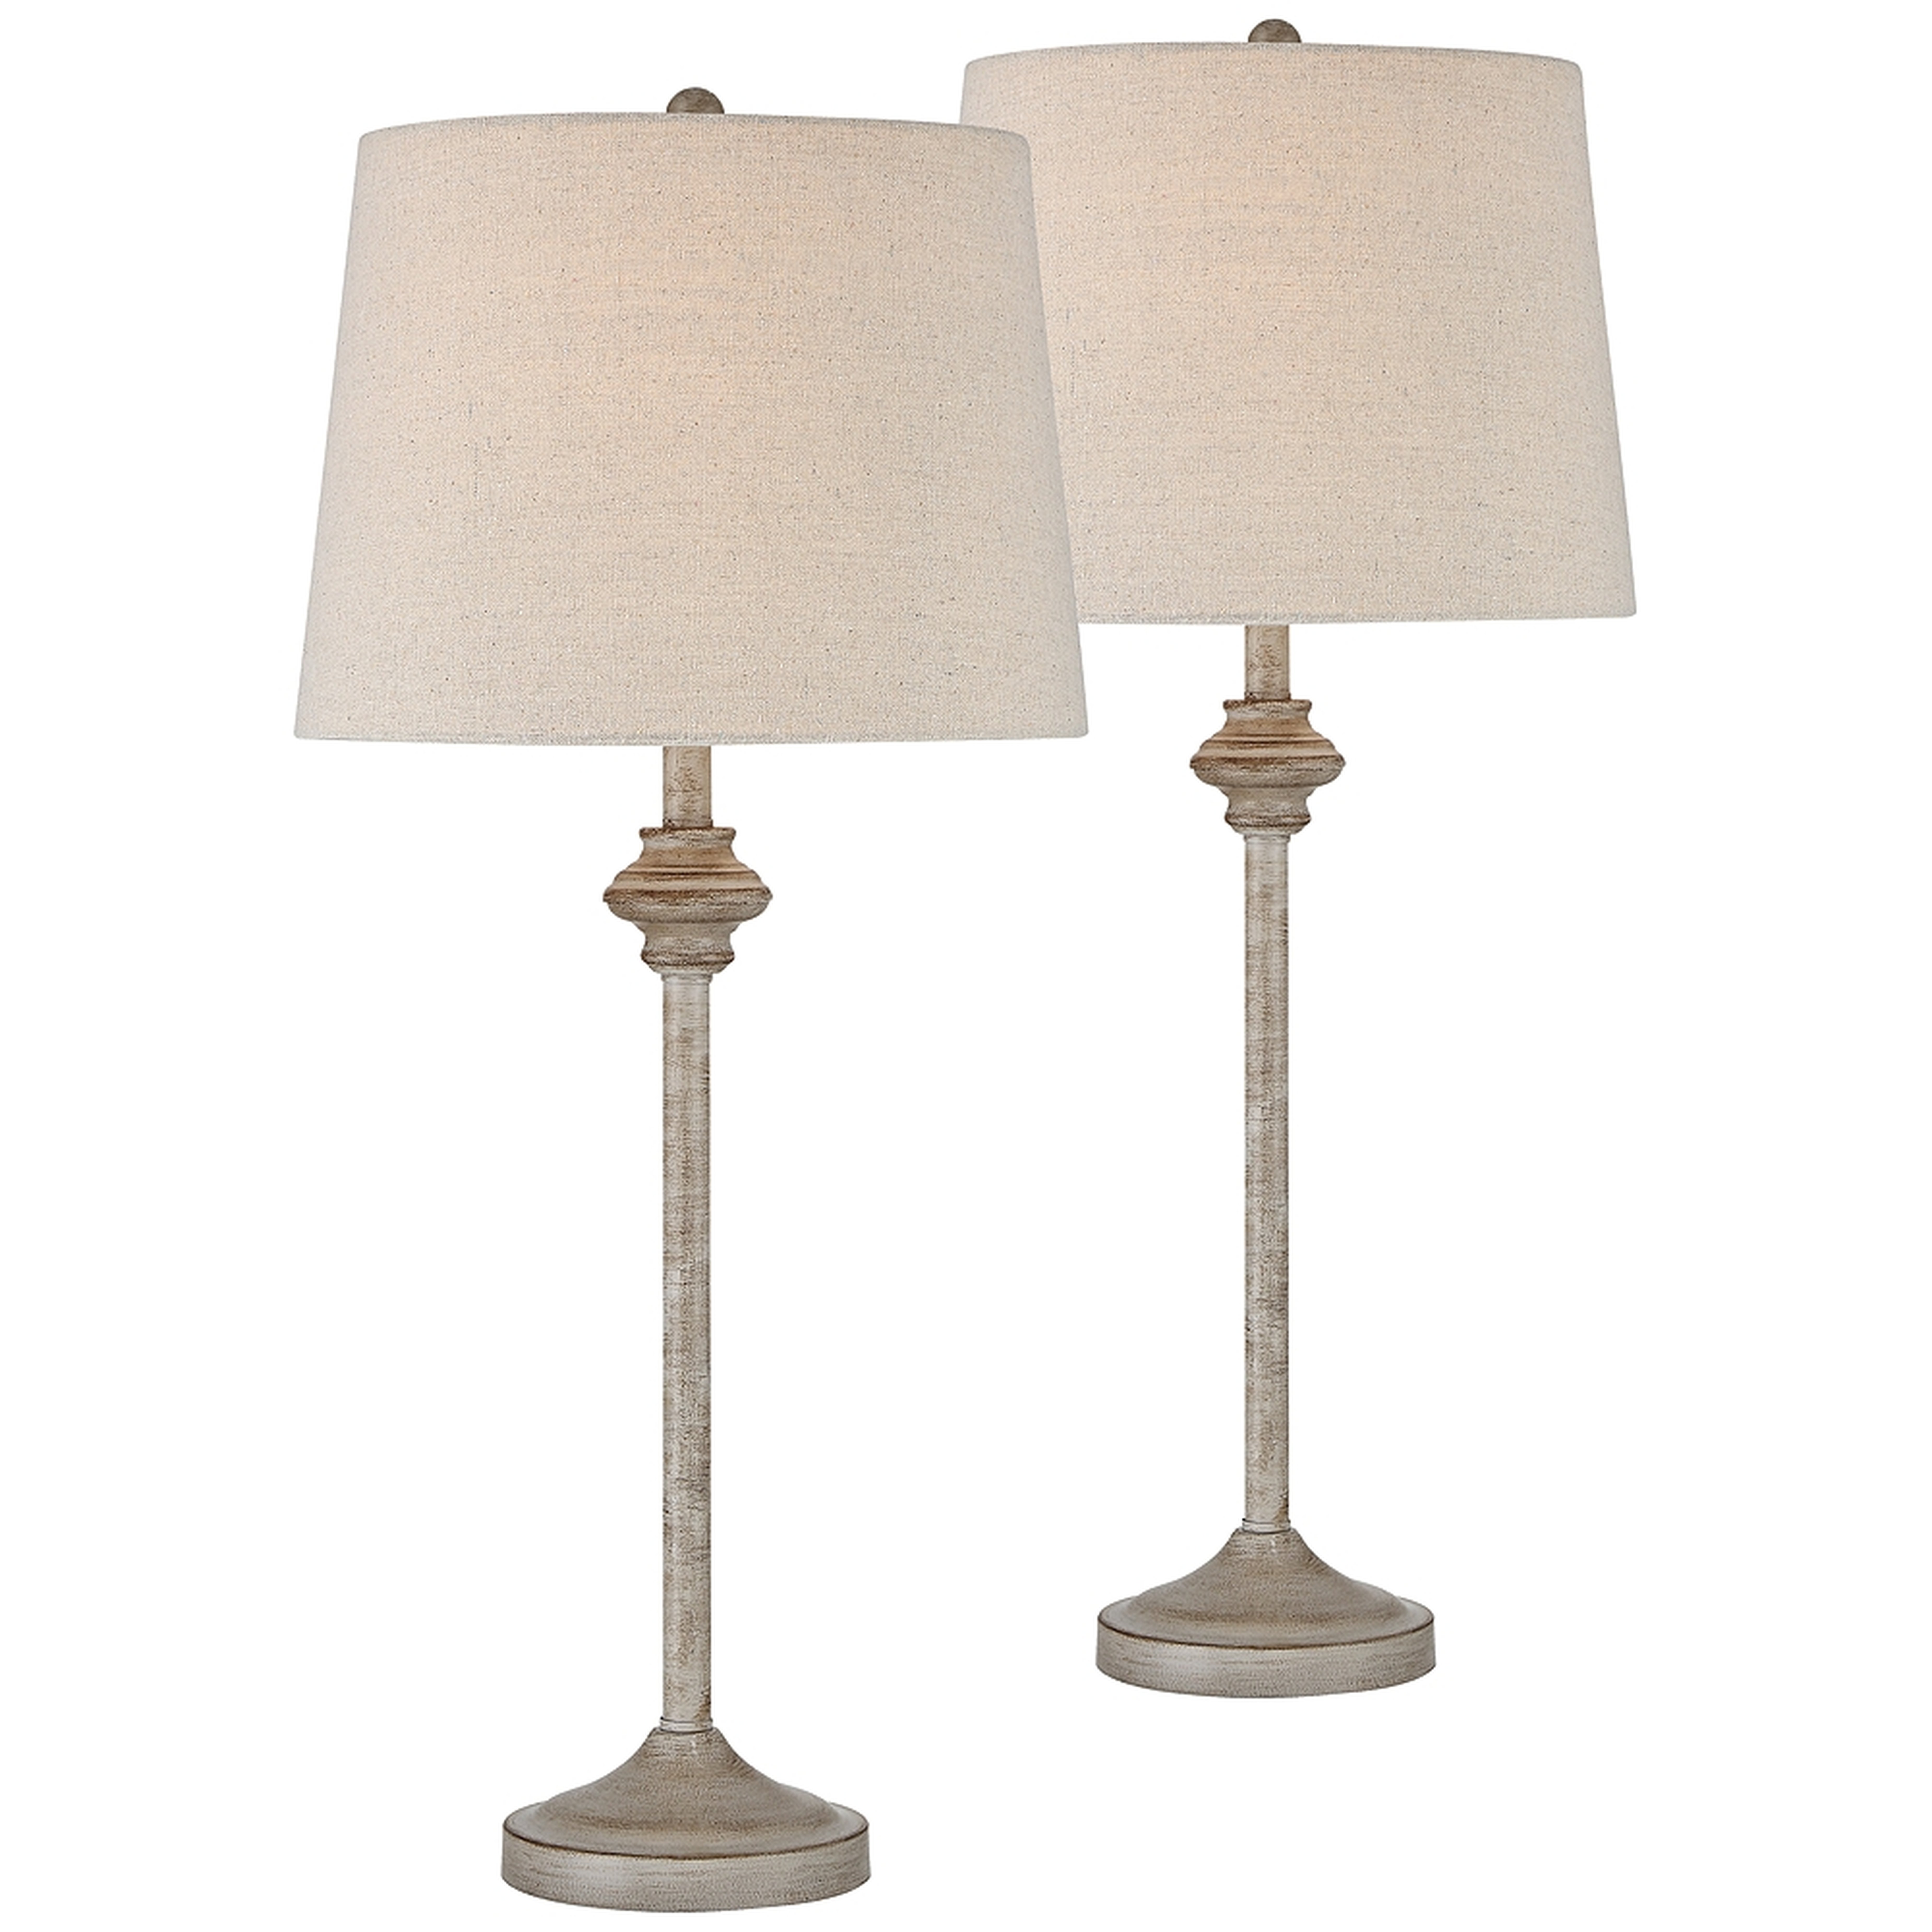 Lynn Beige Buffet Table Lamps Set of 2 - Style # 67Y77 - Lamps Plus